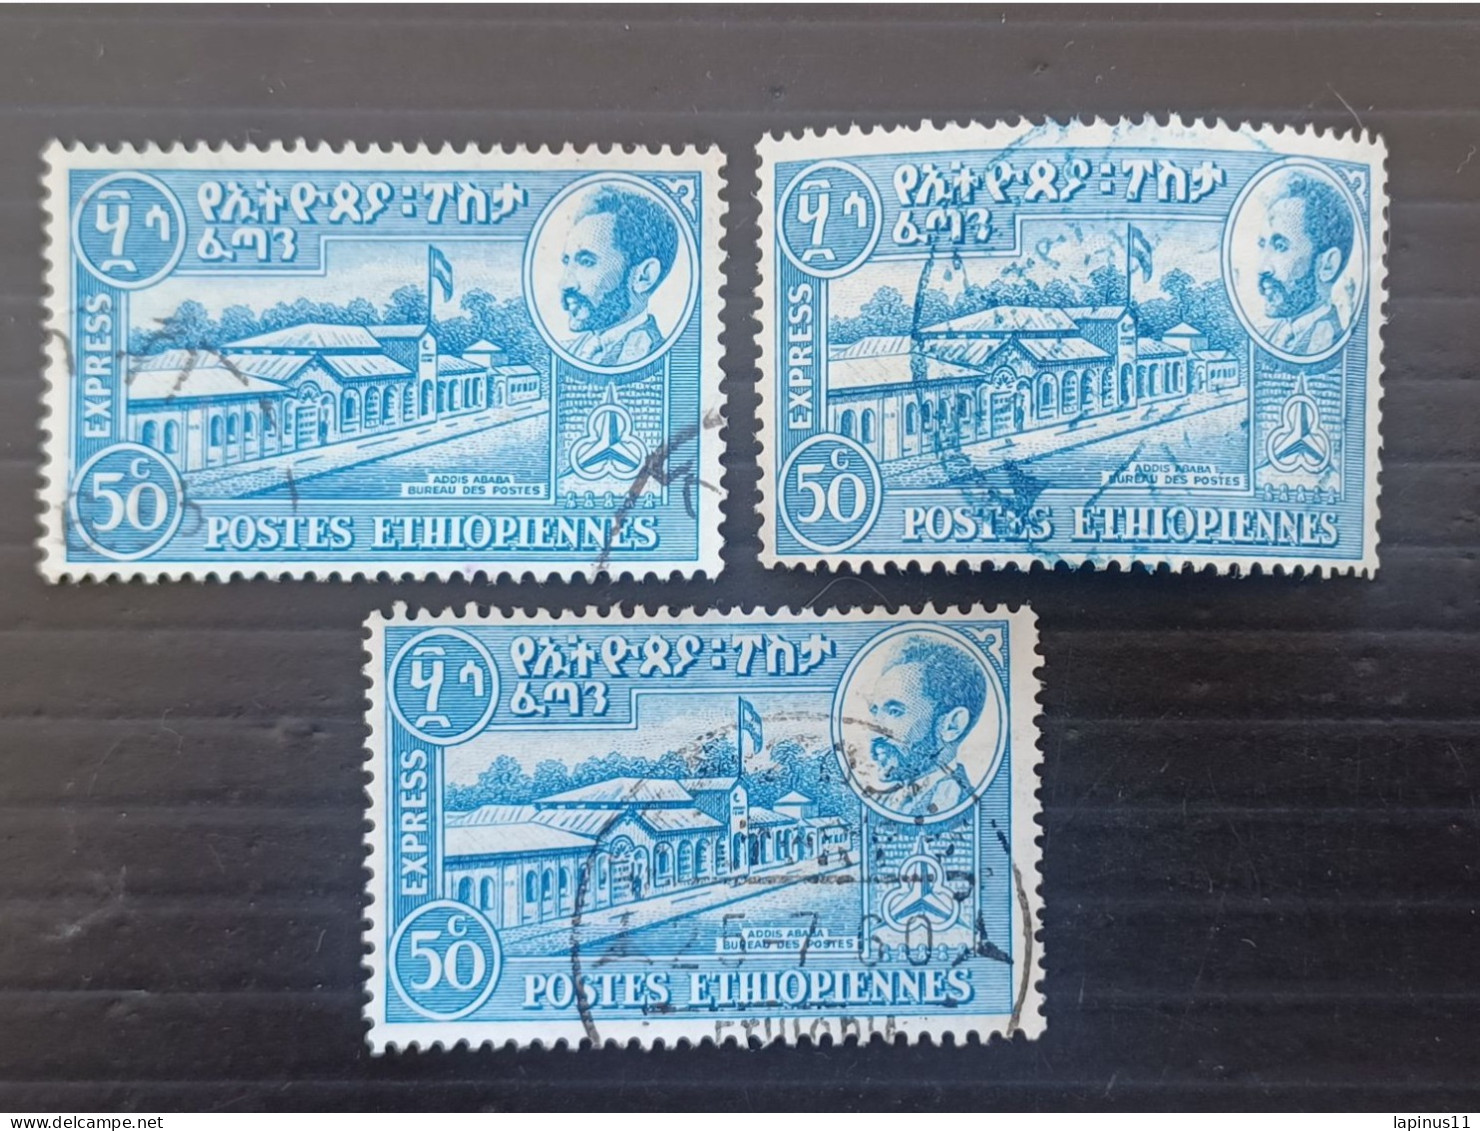 ETIOPIA 1954 EXPRESS STAMPS YVERT N 4 EXCEPTIONAL "A" WATERMARK POSITION ERROR INVERTED - Etiopia